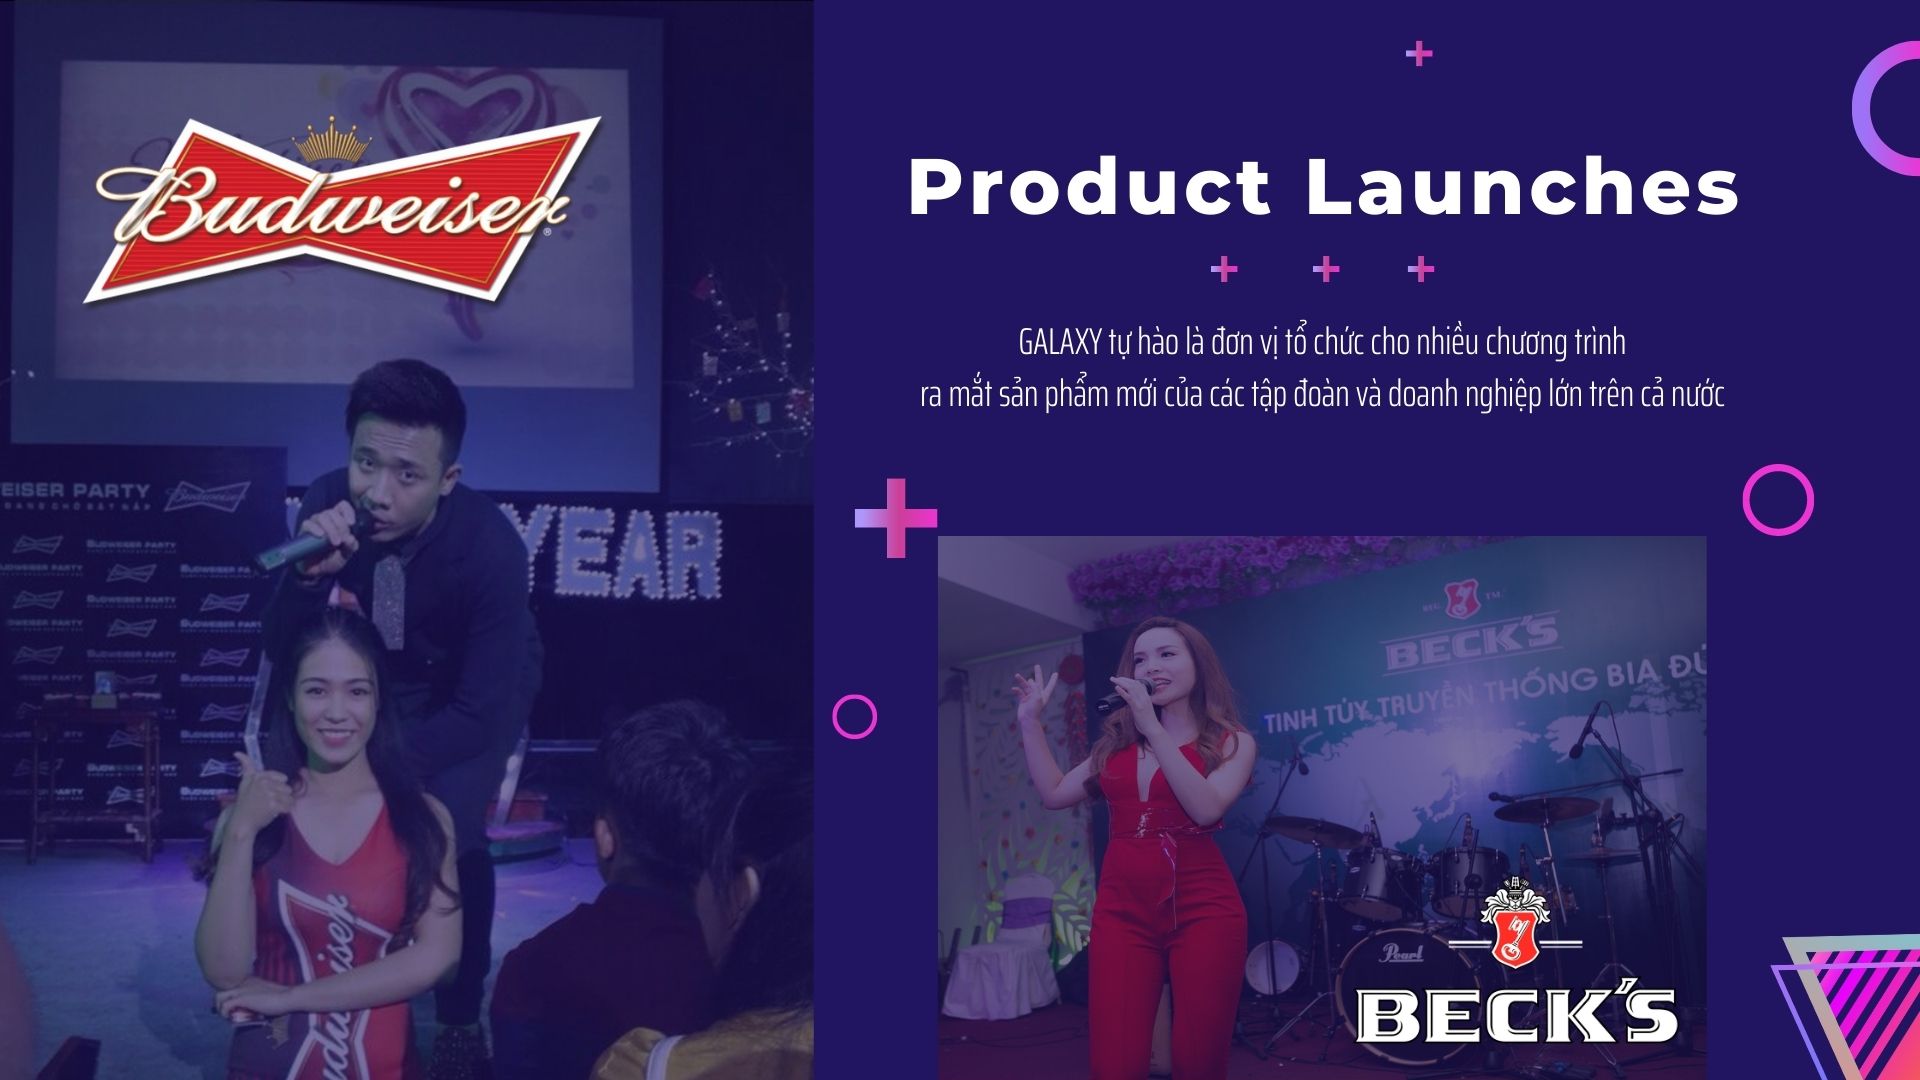 Product Launches - Ra mắt sản phẩm mới